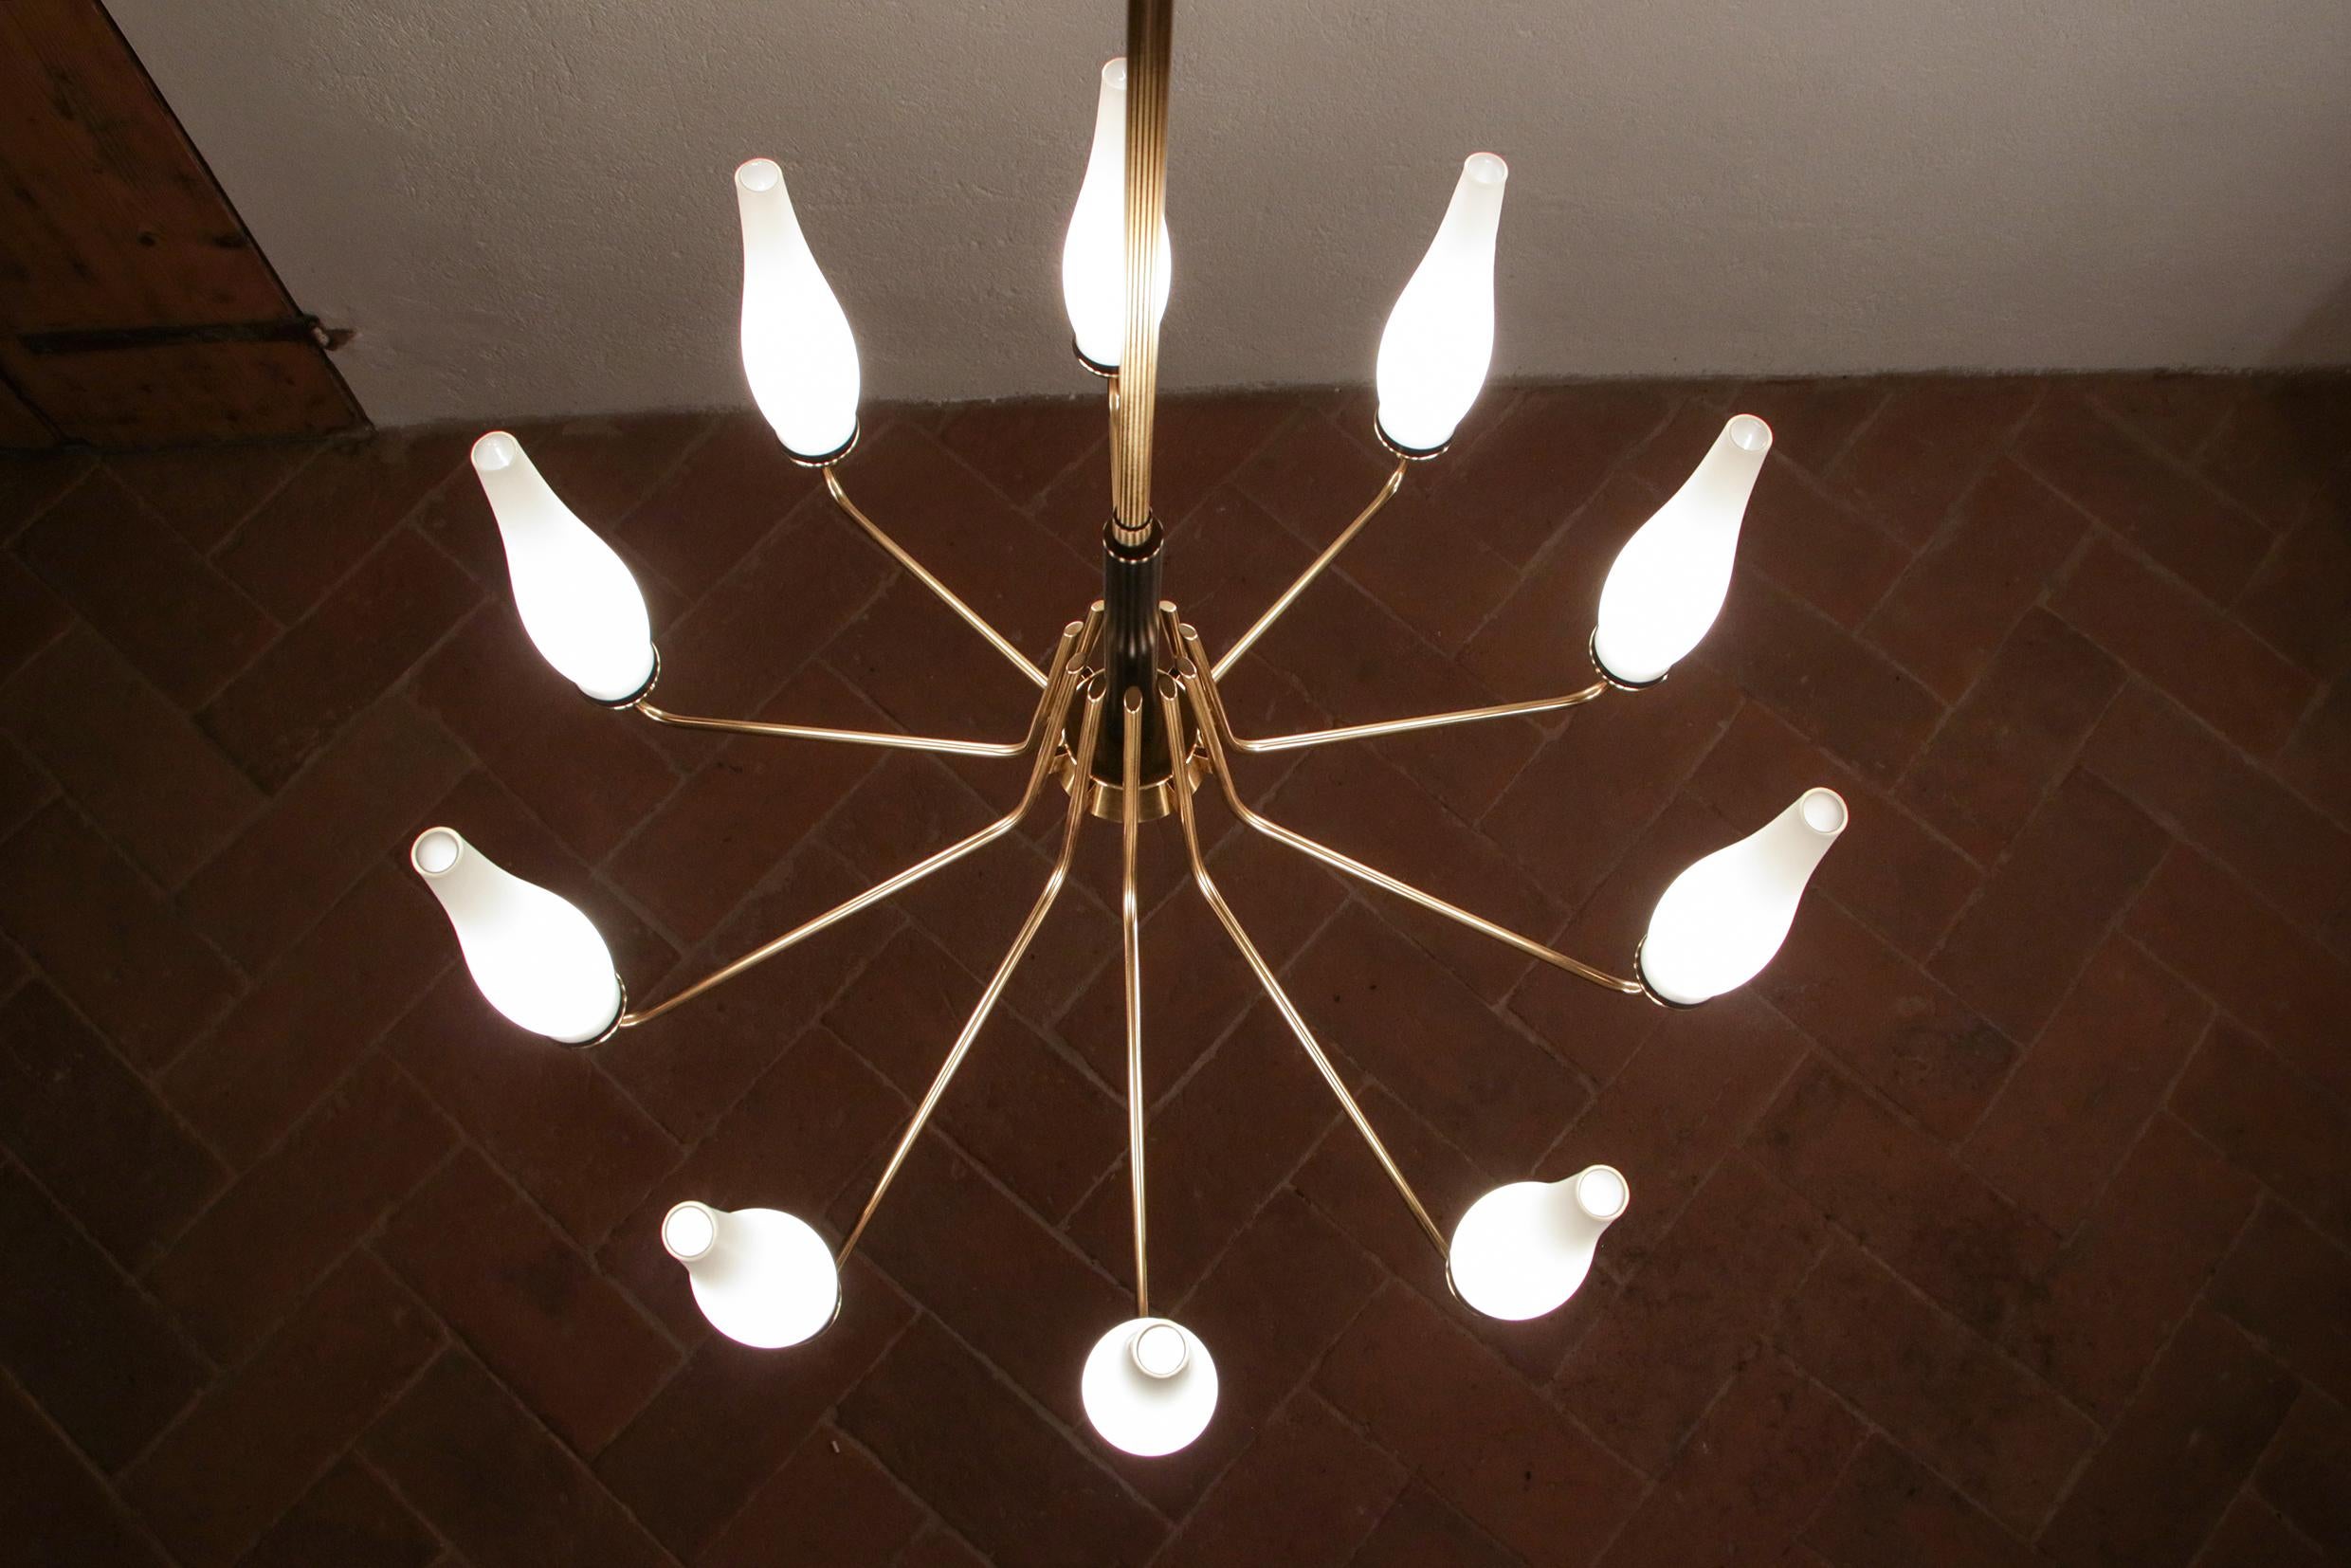 Italian Mid-Century Modern Ten Lights Chandelier Attributer to Stilnovo, 1950s For Sale 1